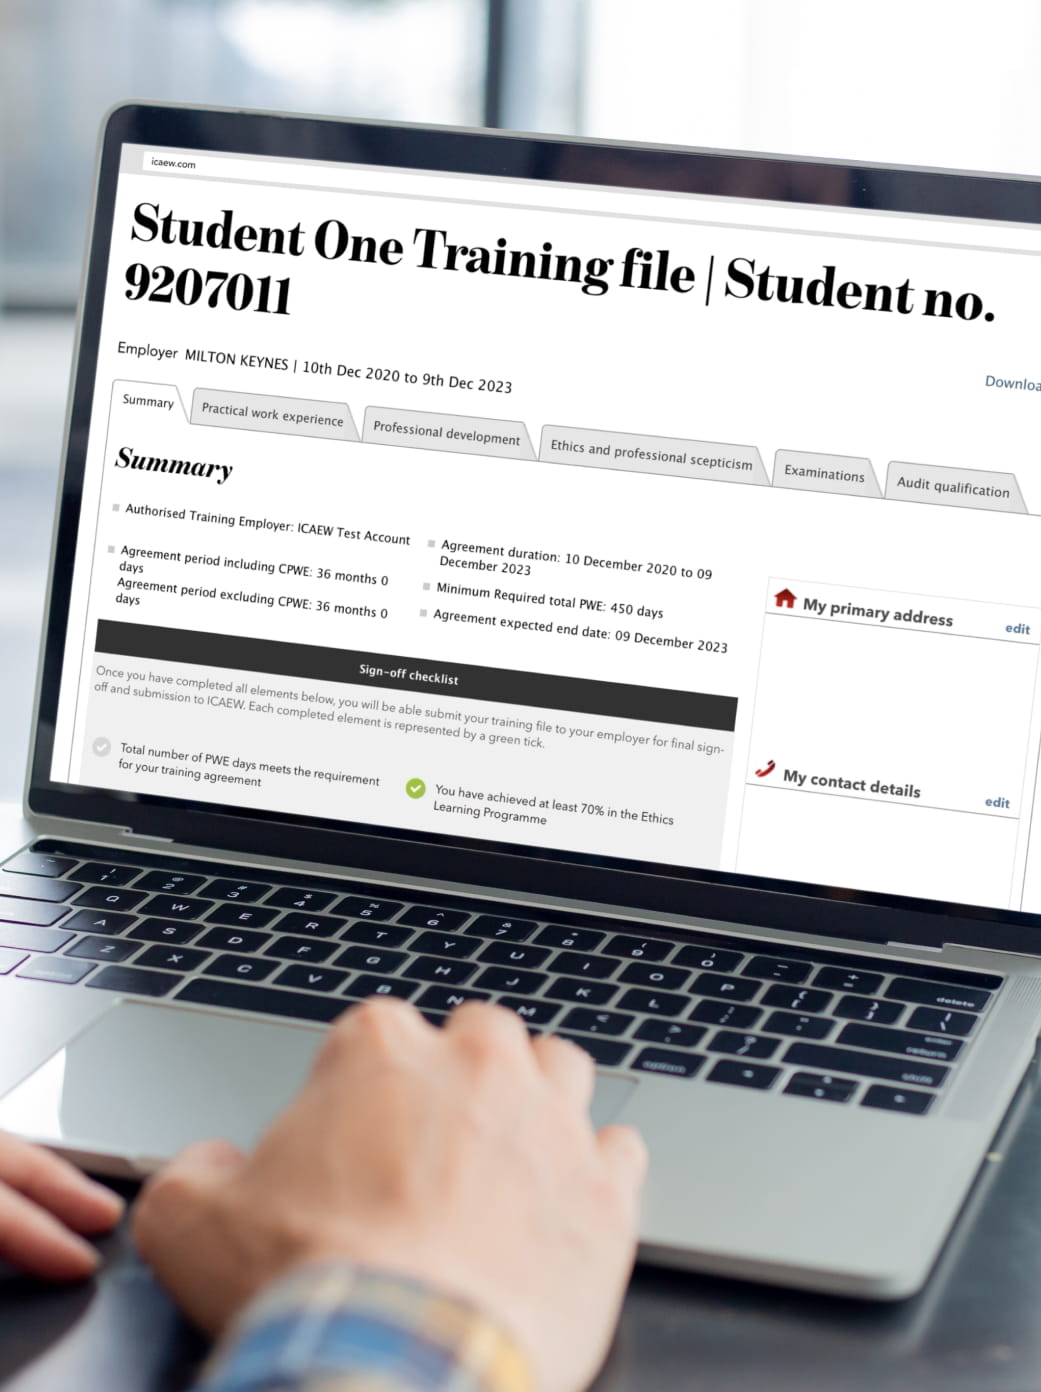 Laptop showing student training file